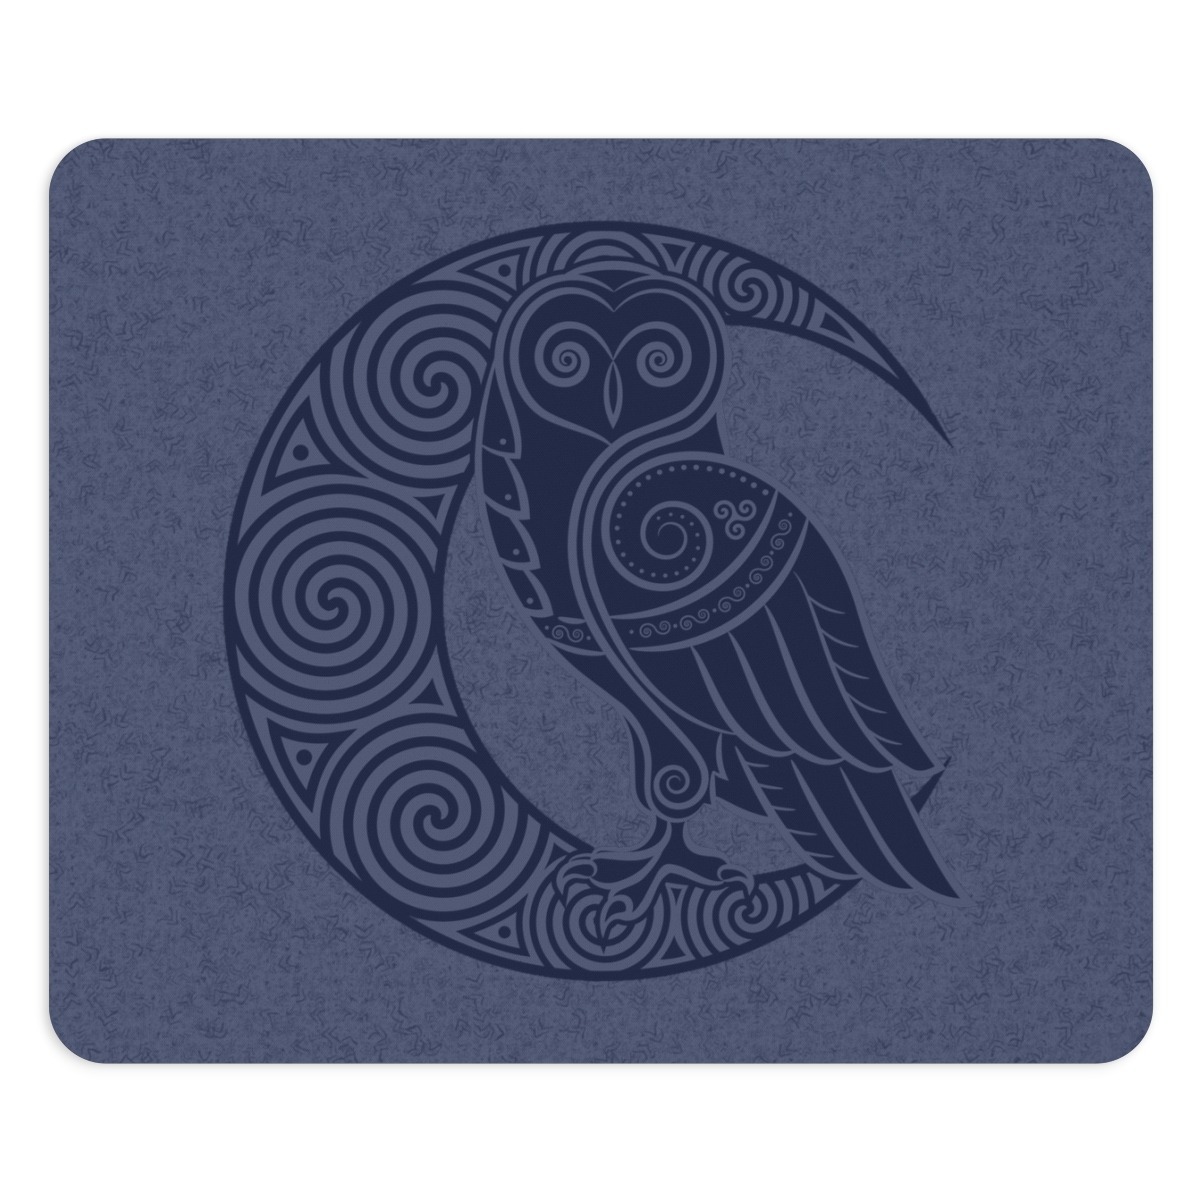 Blue Celtic Owl Moon Mouse Pad